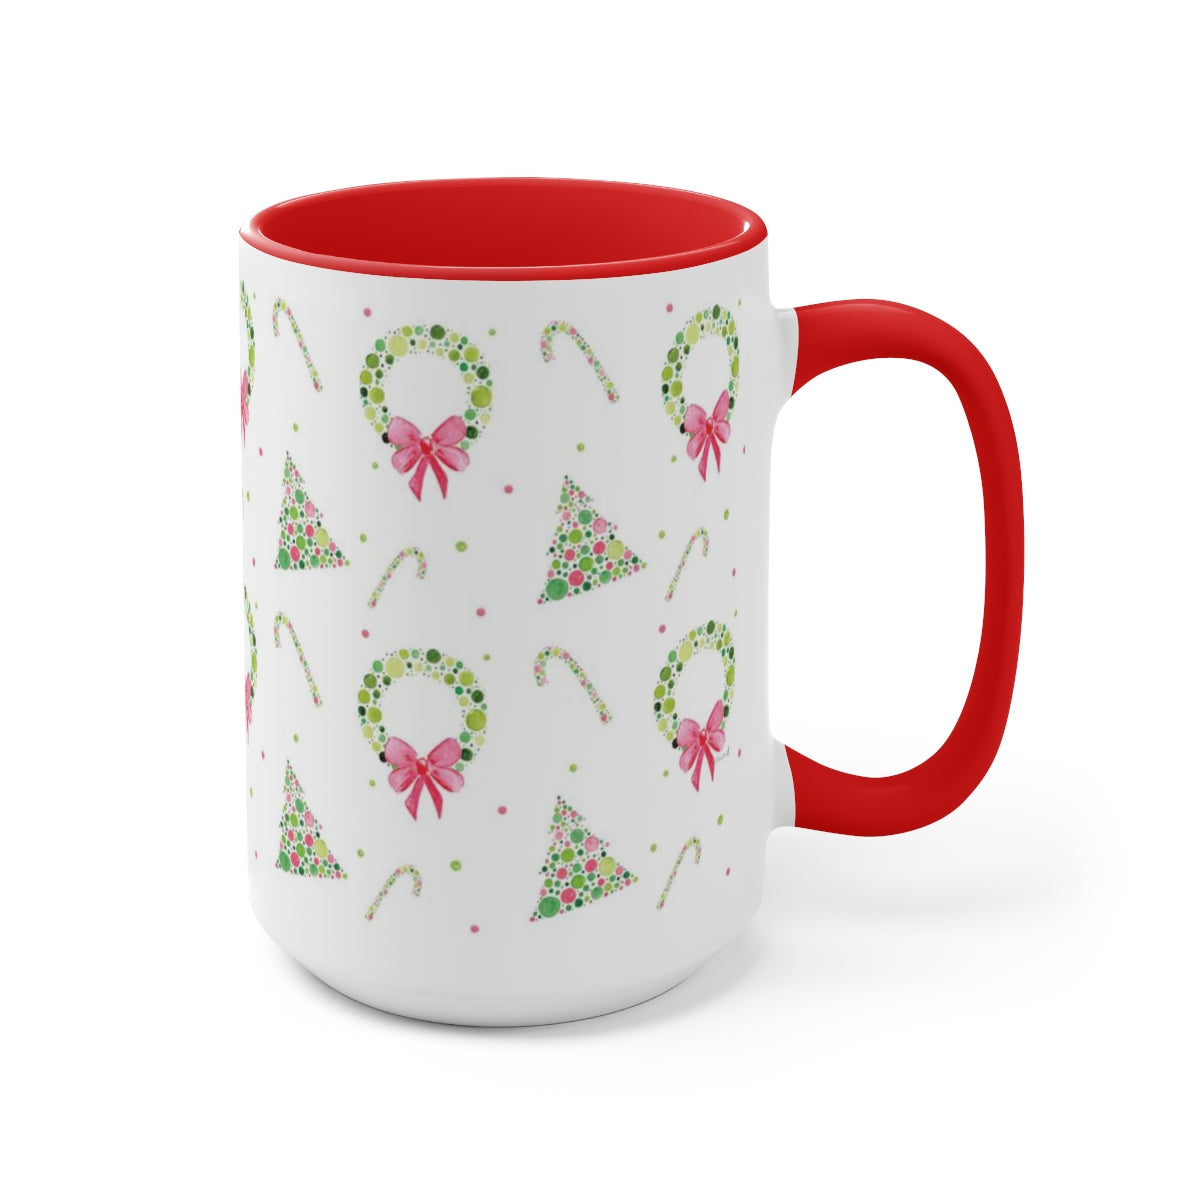 IMPERFECT/SLIGHTLY BLEMISHED Merry Christmas Pointillism Inspired Ceramic Mug